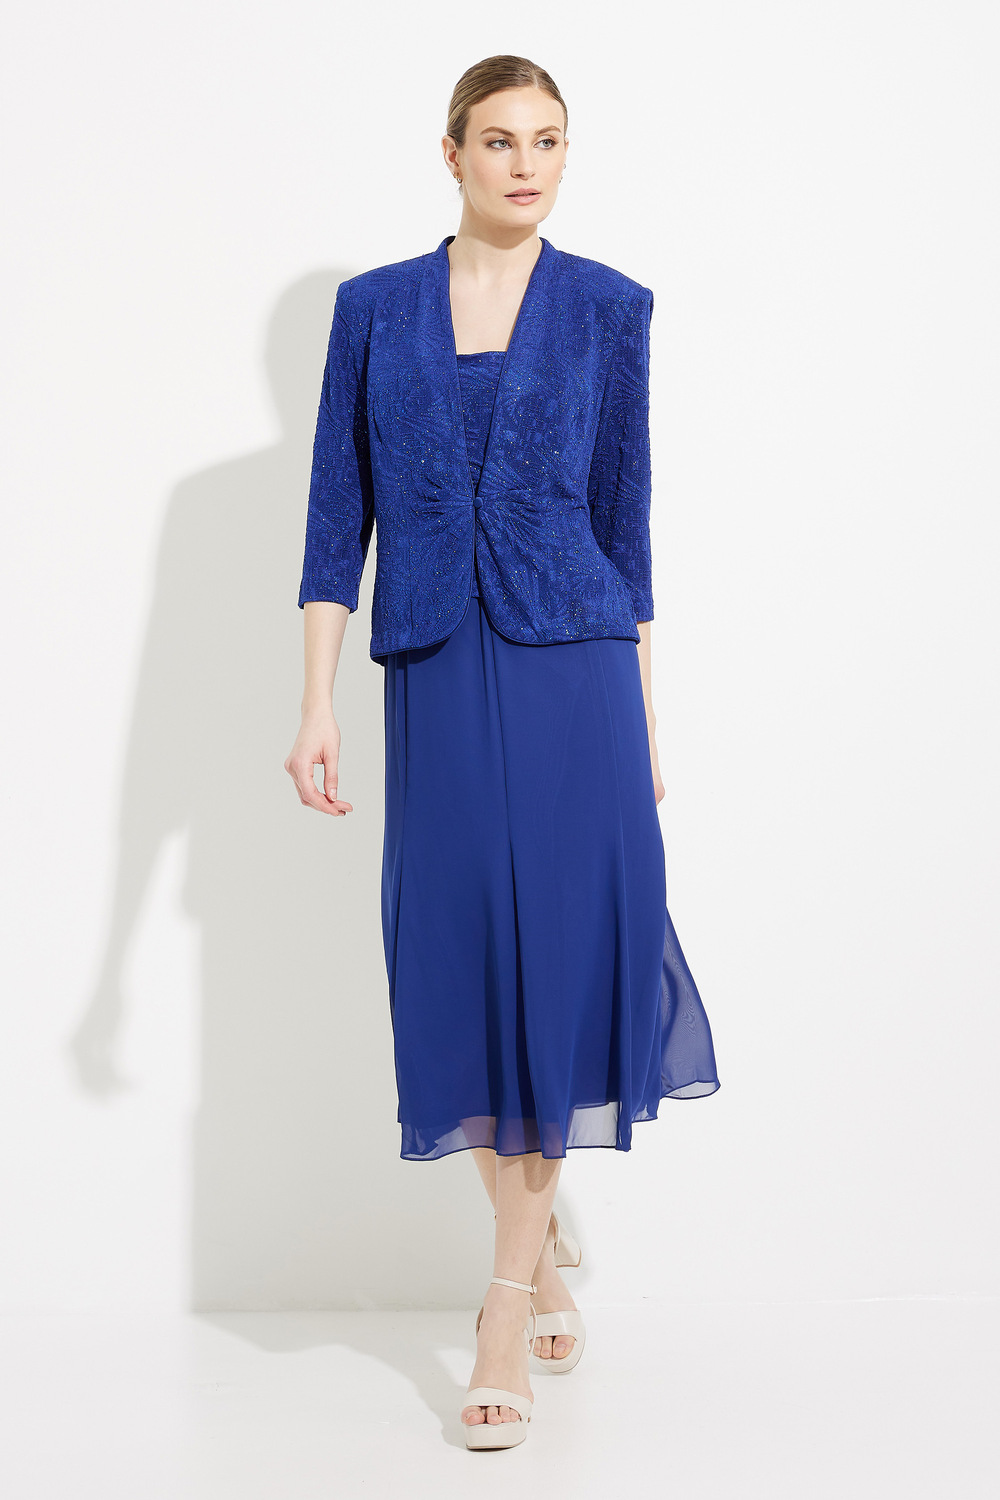 Jacquard Knit & Mesh Skirt Style 125256. Electric Blue